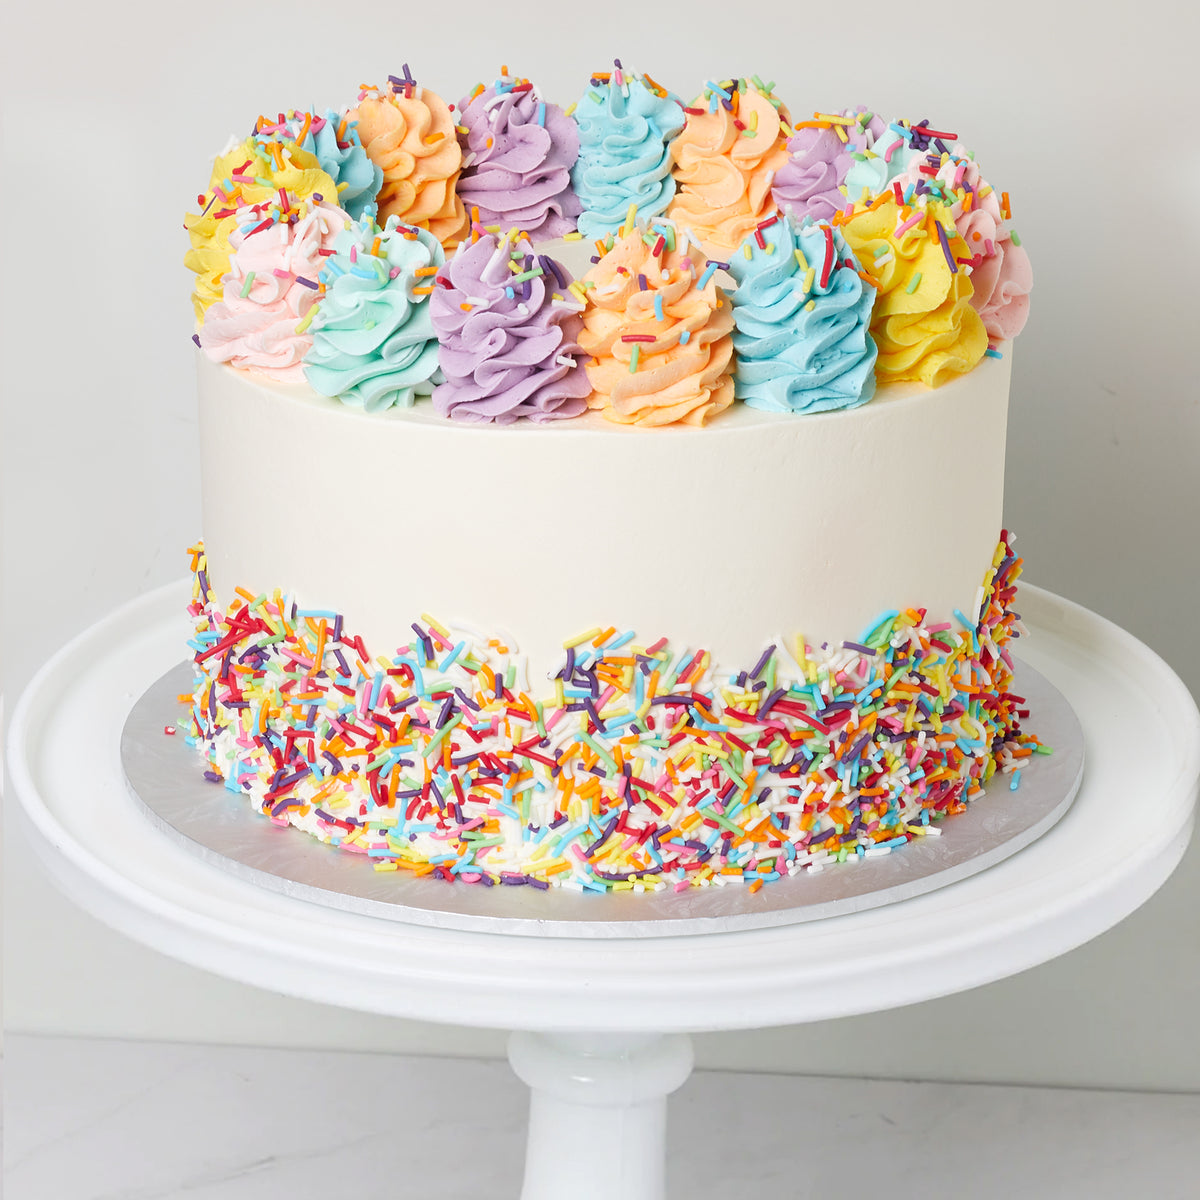 K3] Rainbow Unicorn Cake